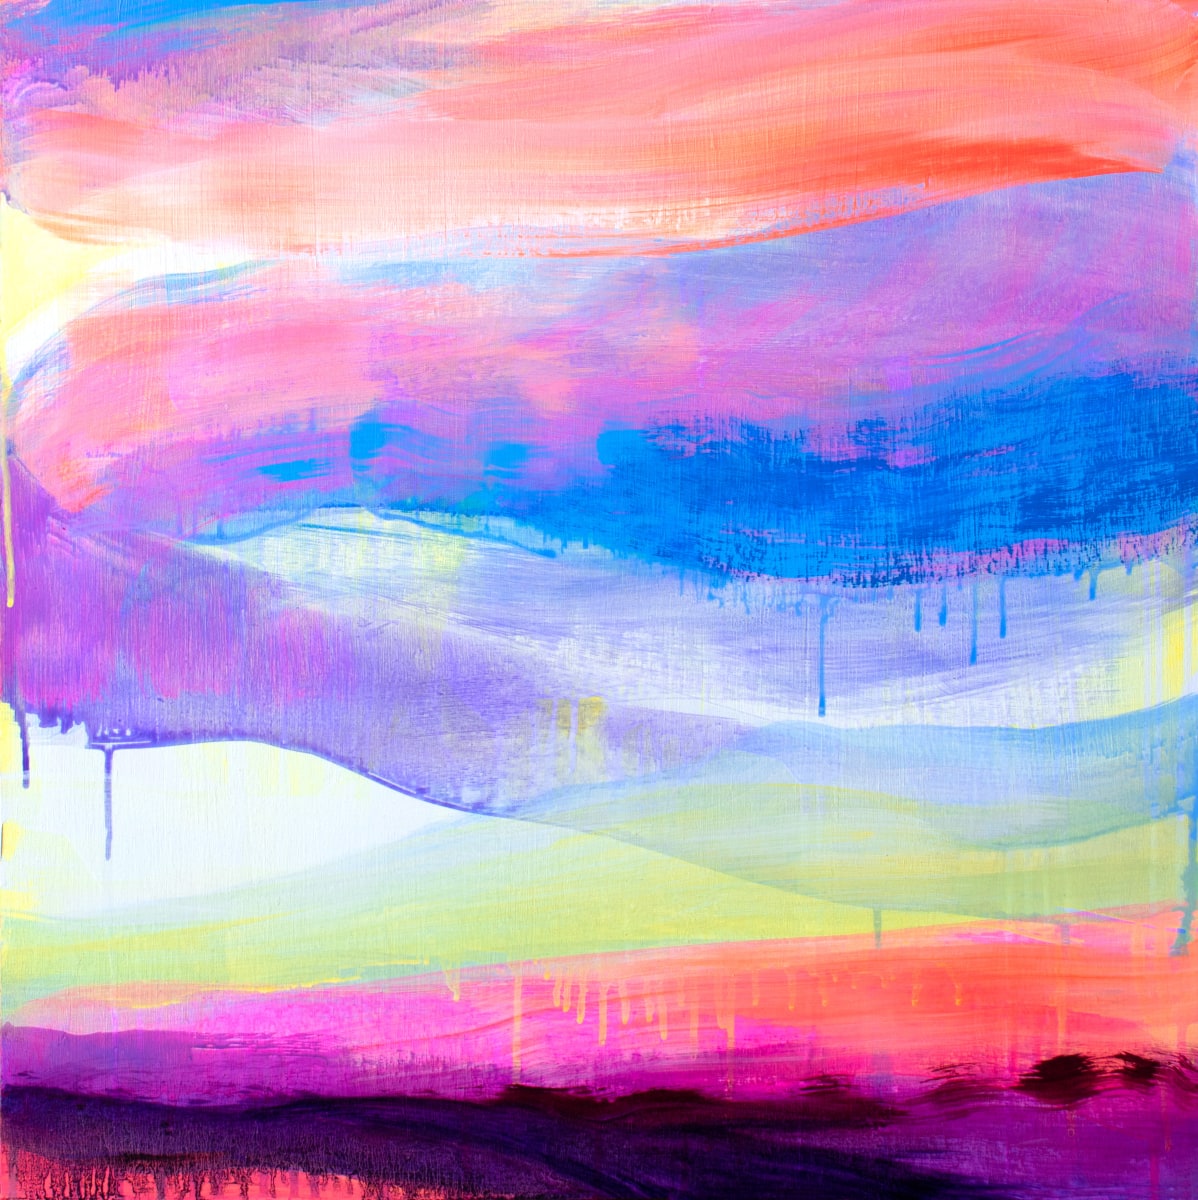 Swish by Melanie Kozol  Image: Abstract Sky Landscape